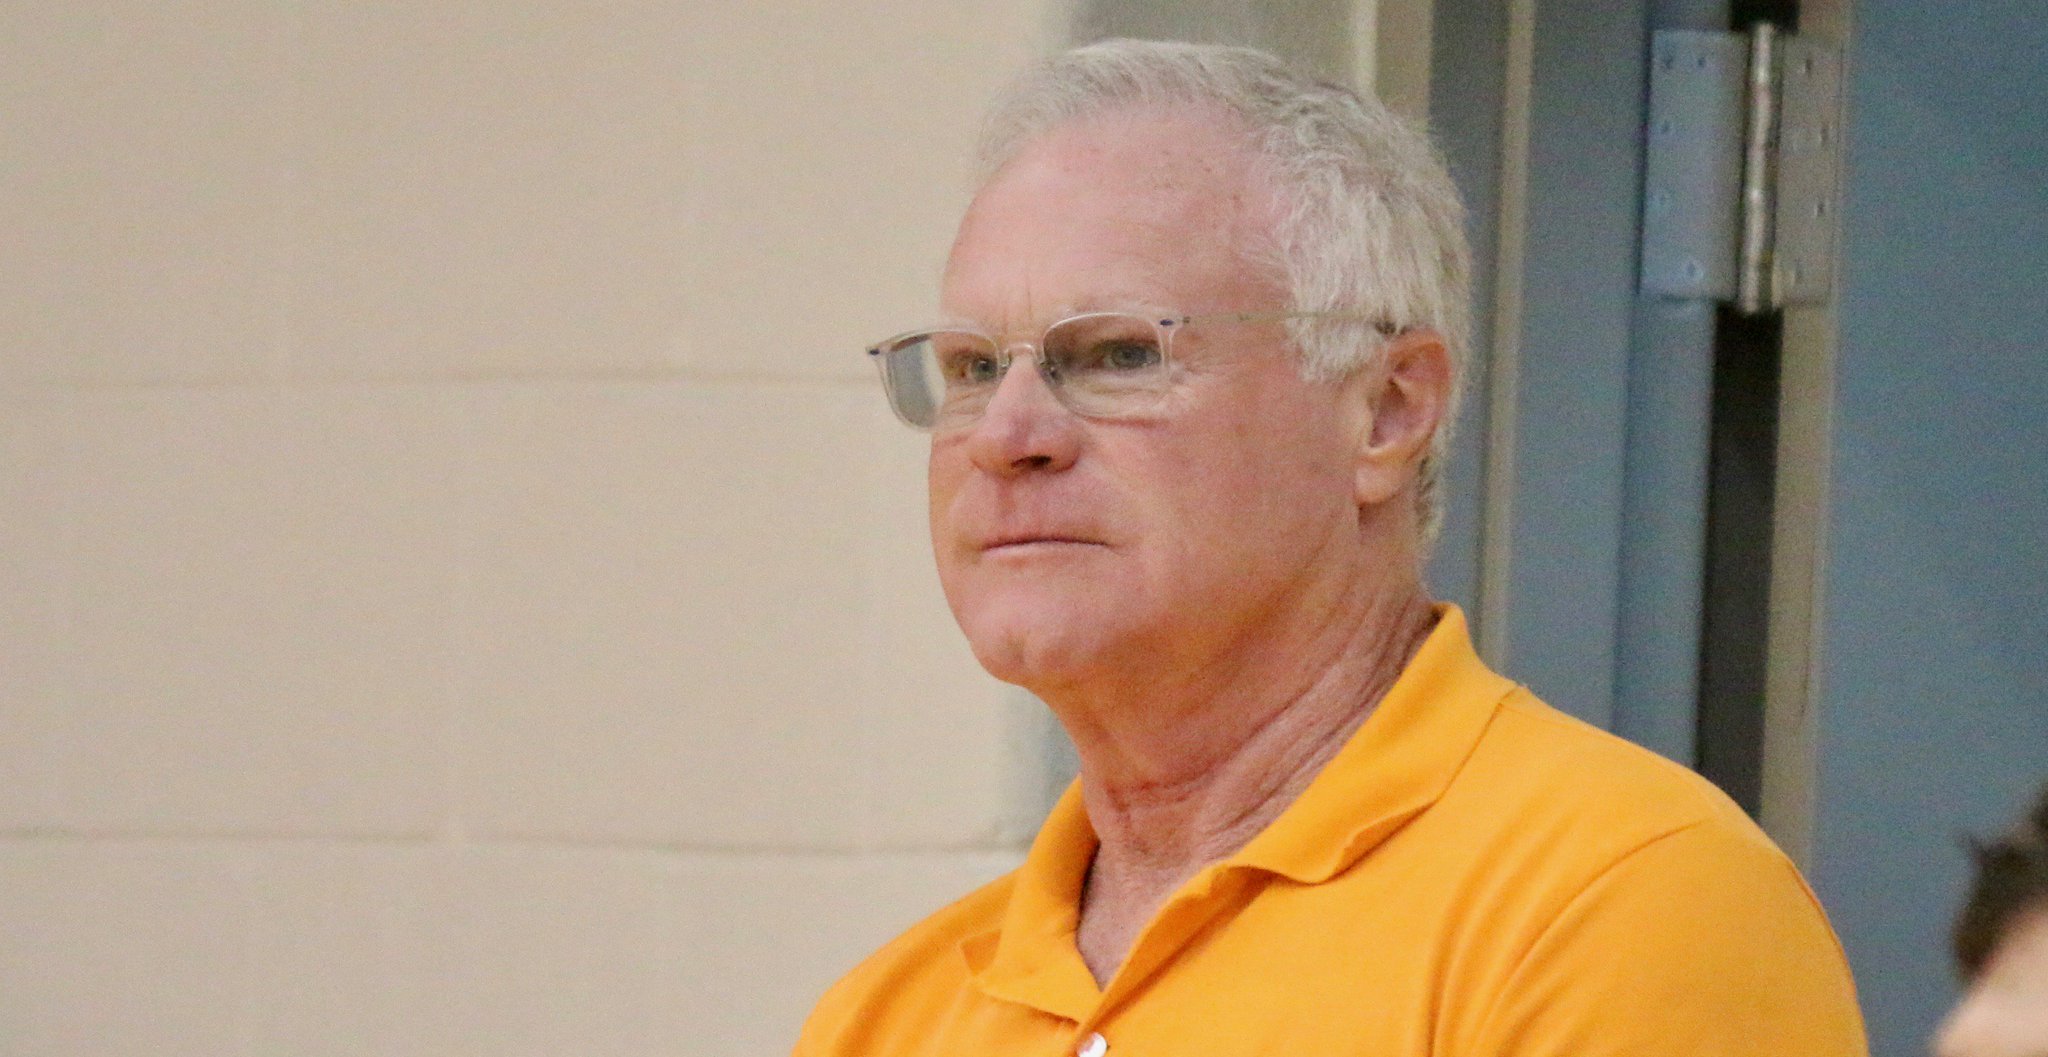 David Keith wearing an orange polo shirt and eye glasses